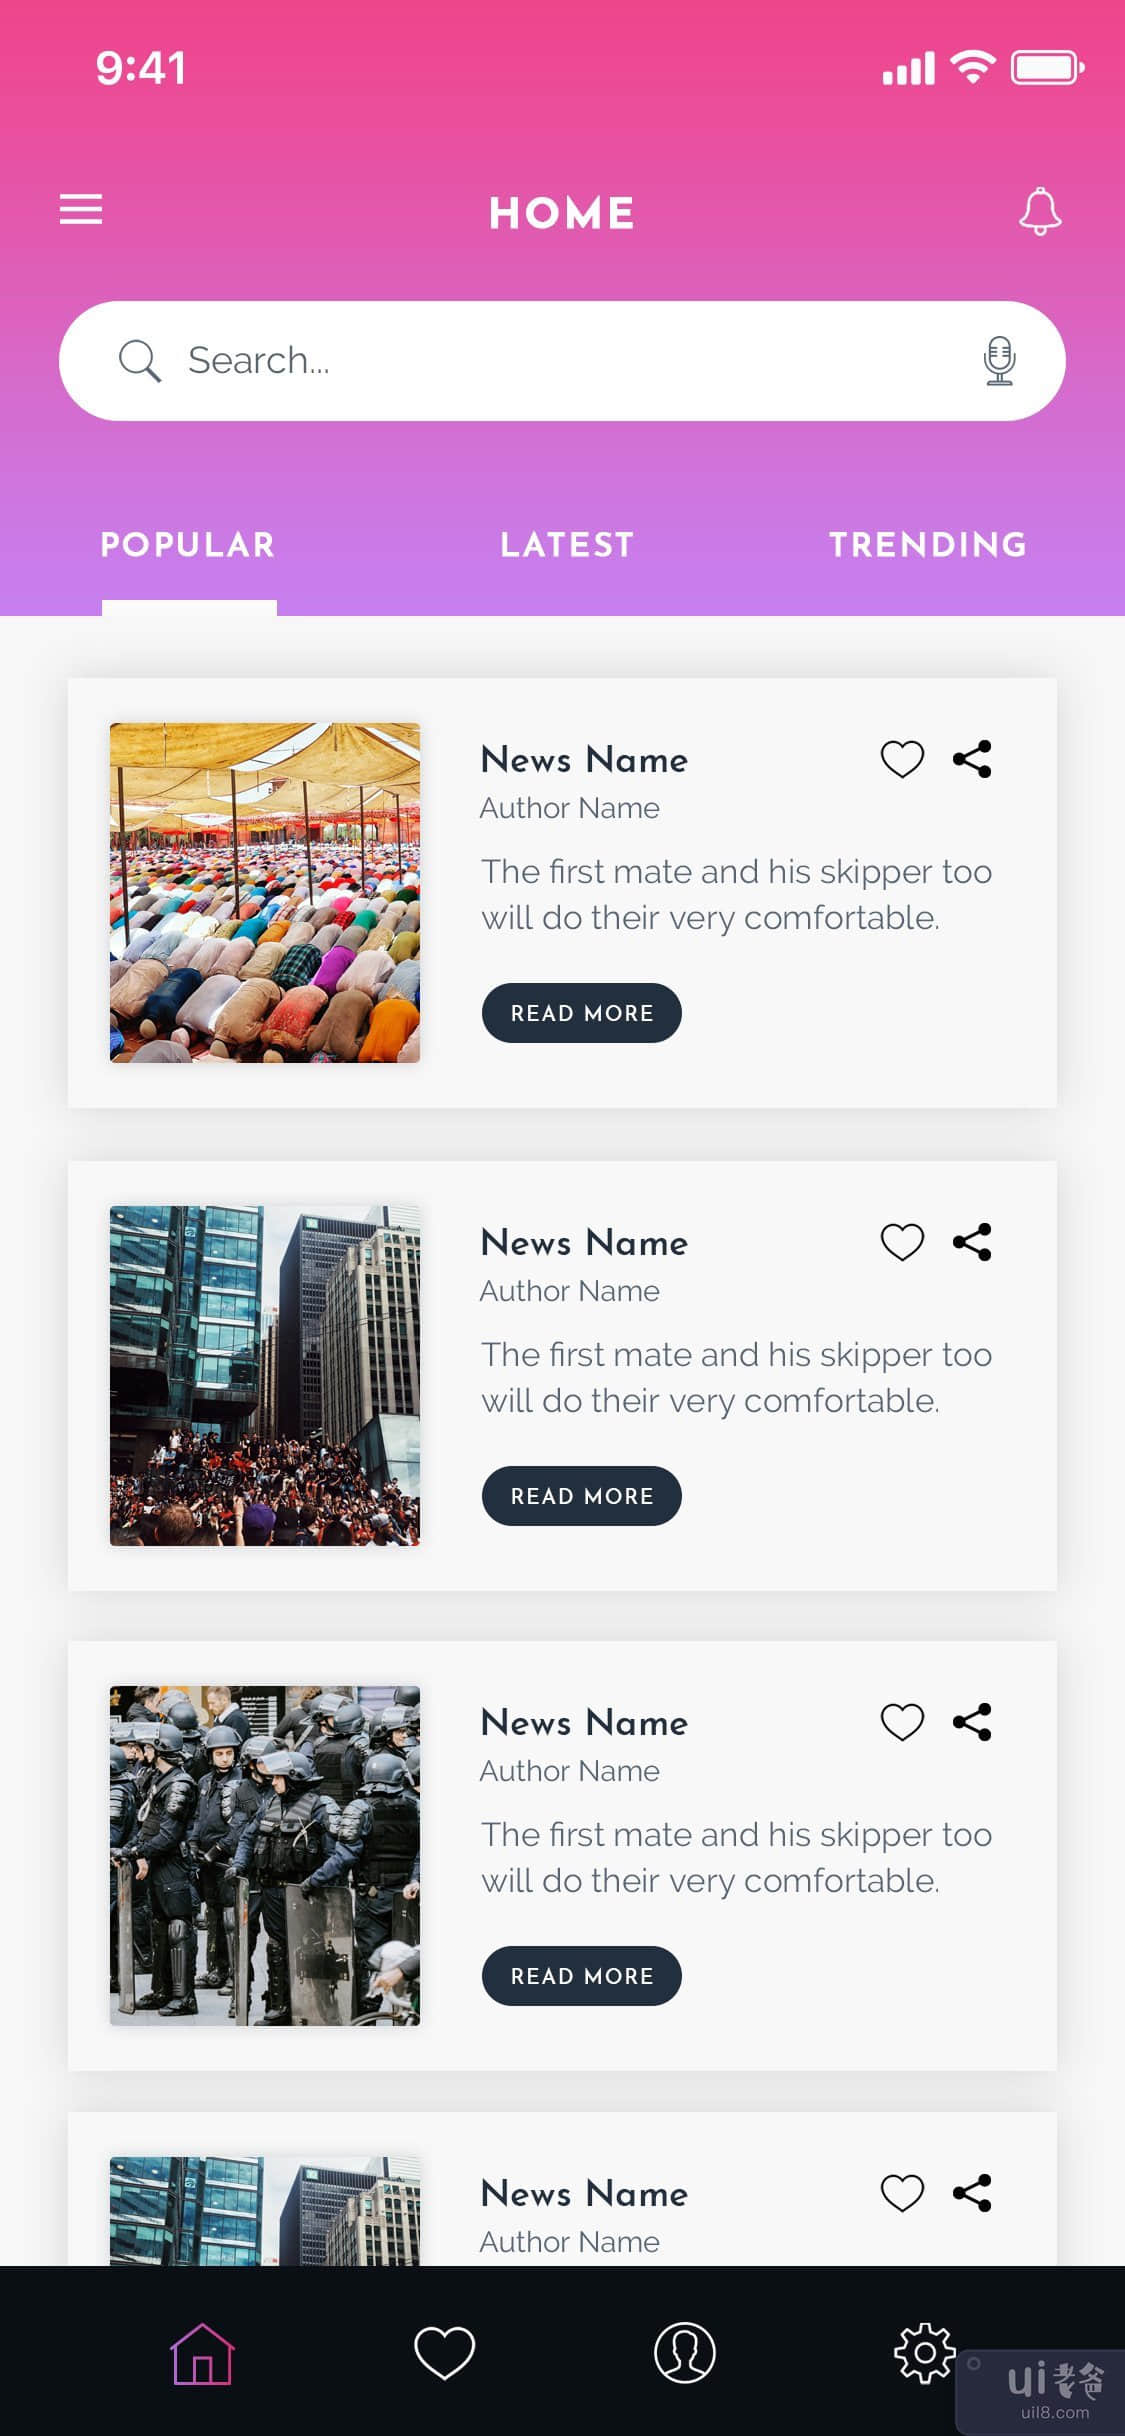 Newsy News 移动应用程序 UI 套件(Newsy News Mobile App UI Kit)插图4